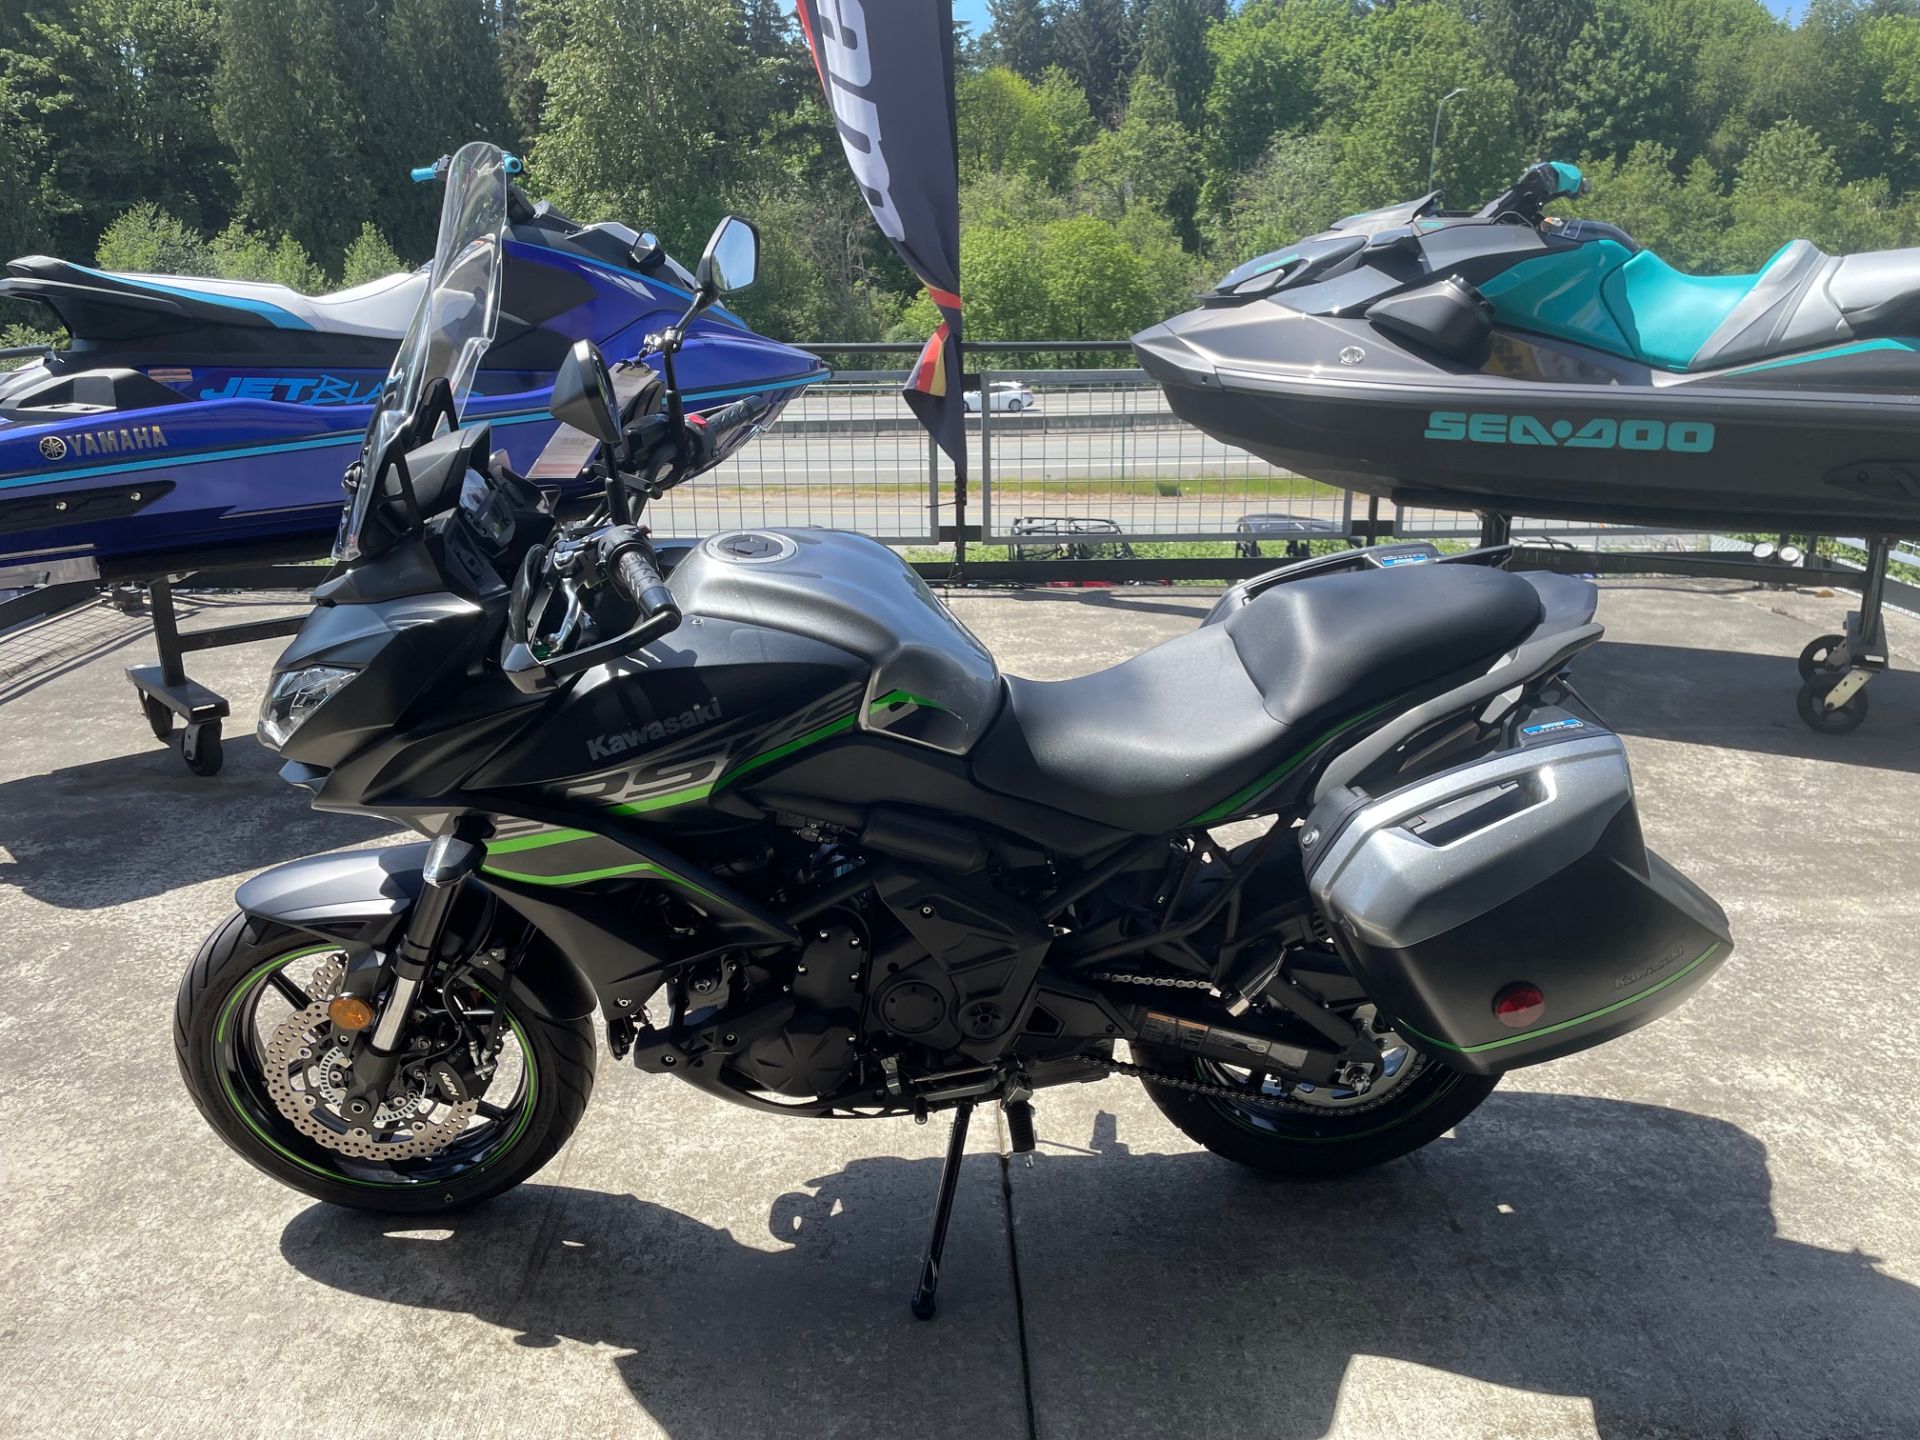 2019 Kawasaki Versys 650 LT in Woodinville, Washington - Photo 2